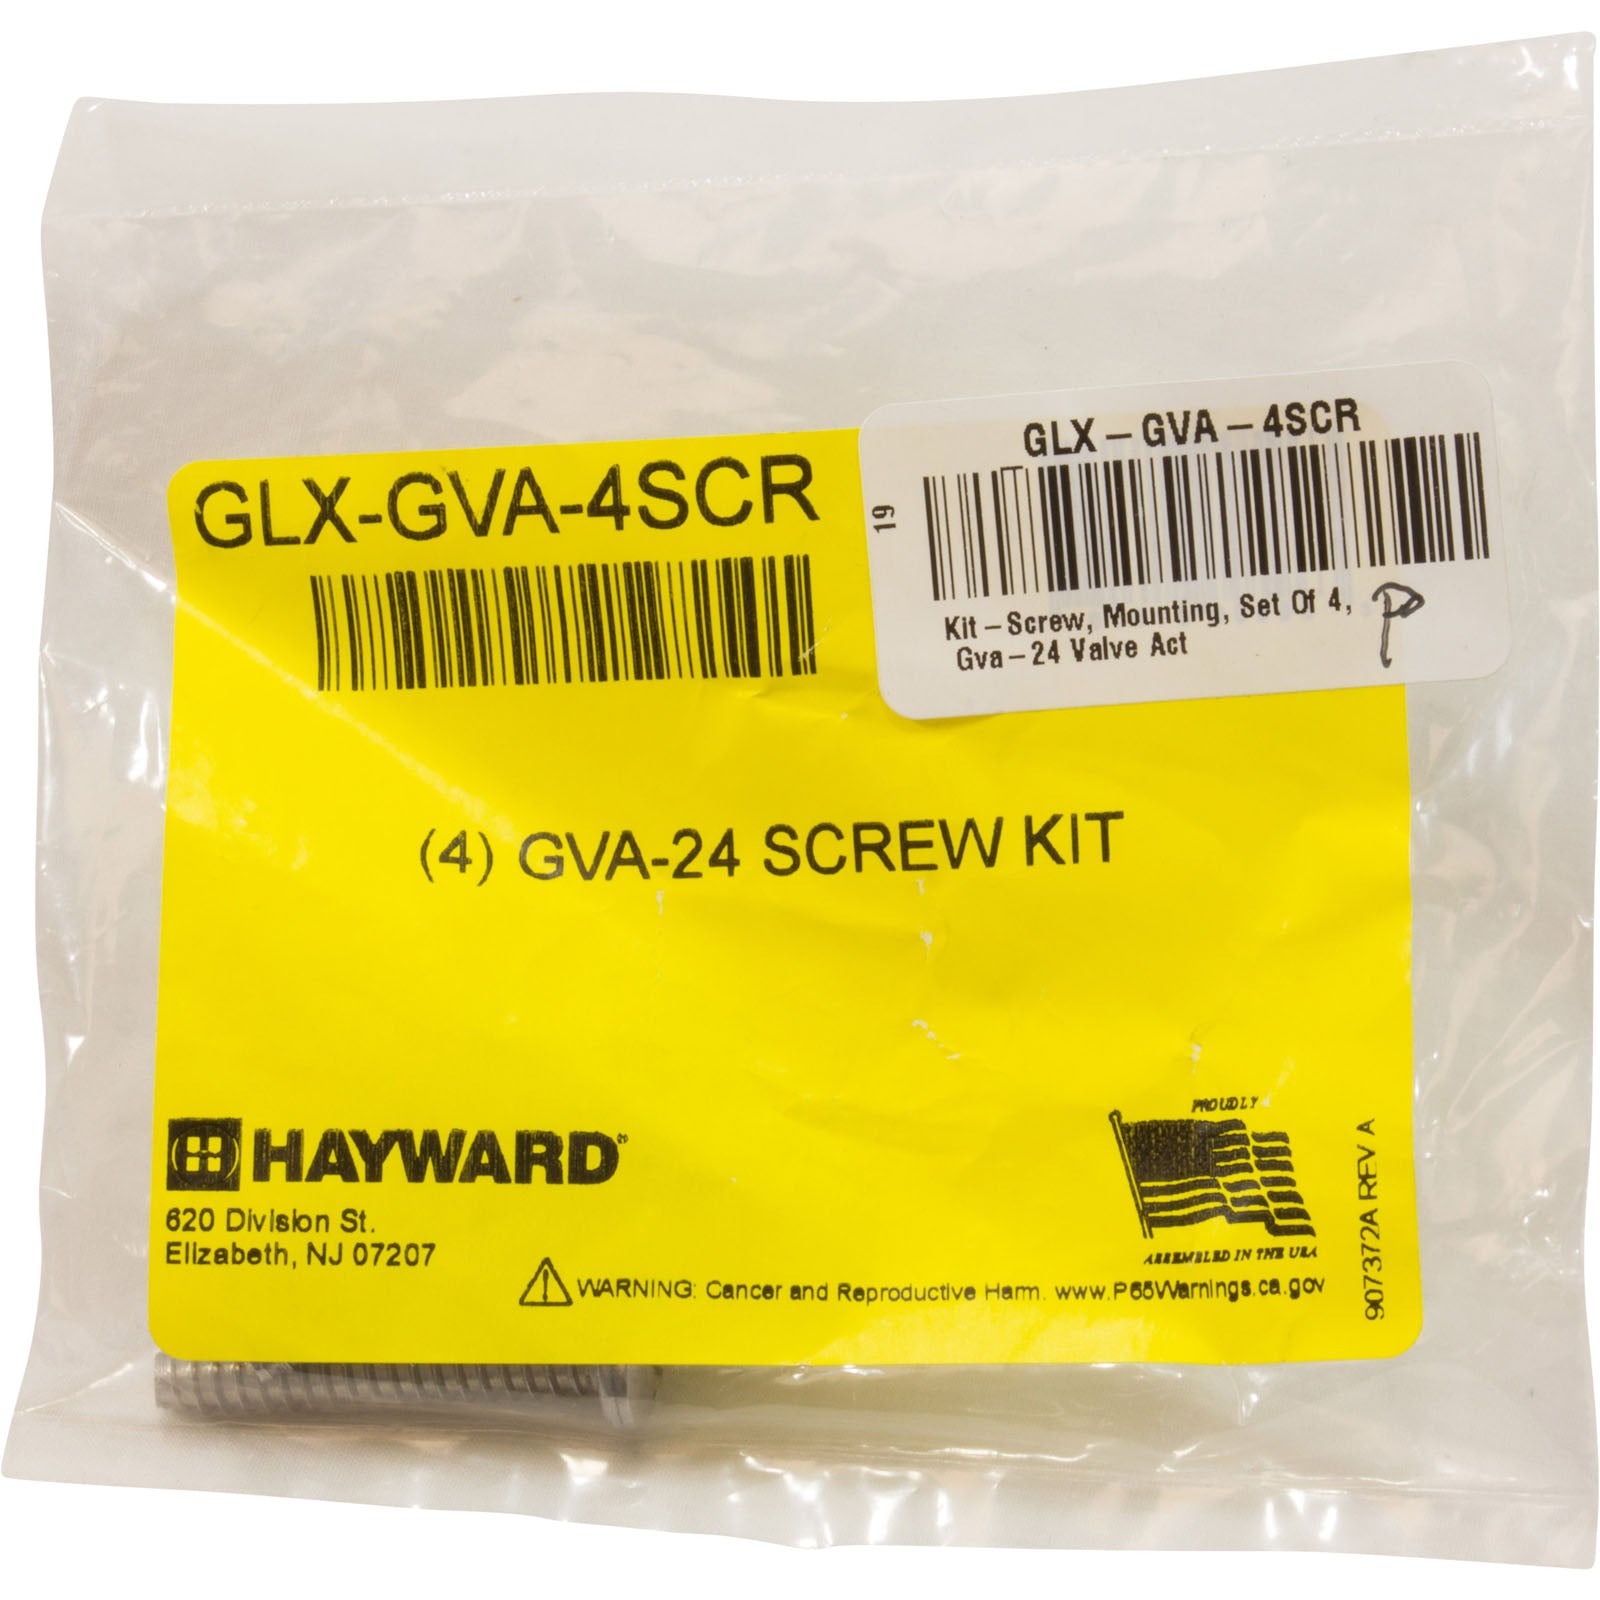 Kit-Screw, Mounting, Set Of 4 GLX-GVA-4SCR